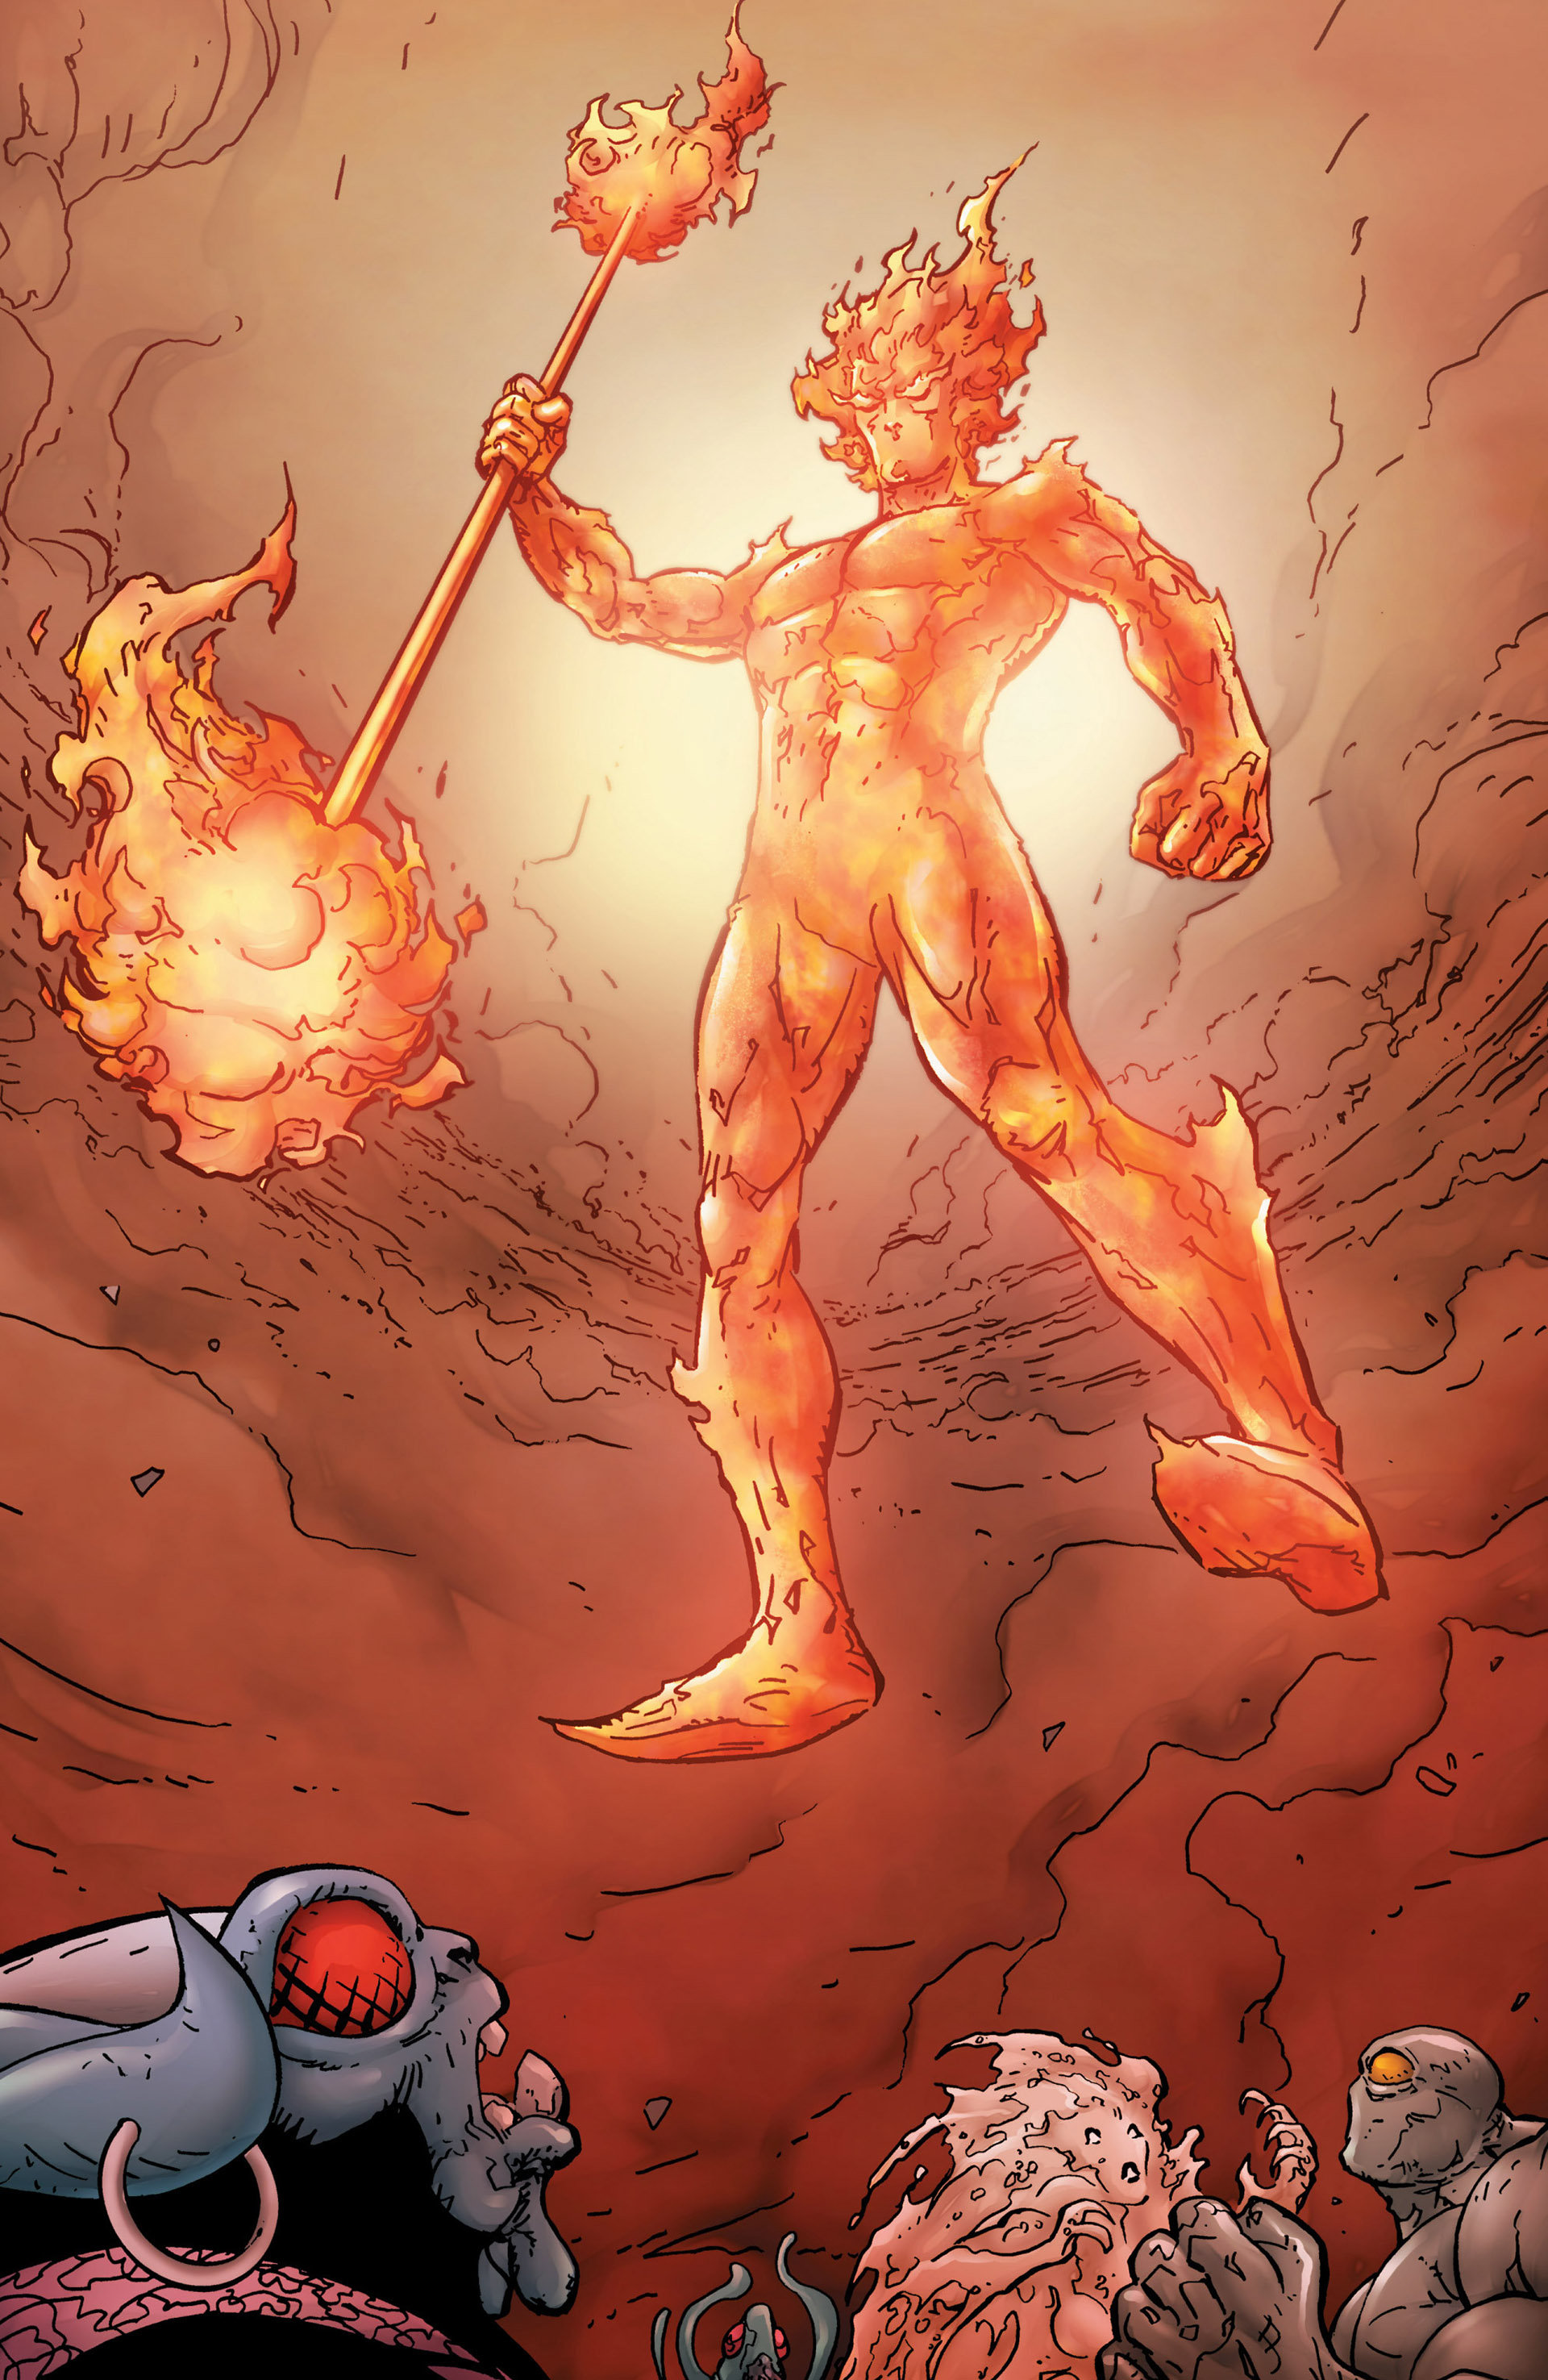 DC / MARVEL galactus eaglemoss SUPER HERO FIRELORD plomb 